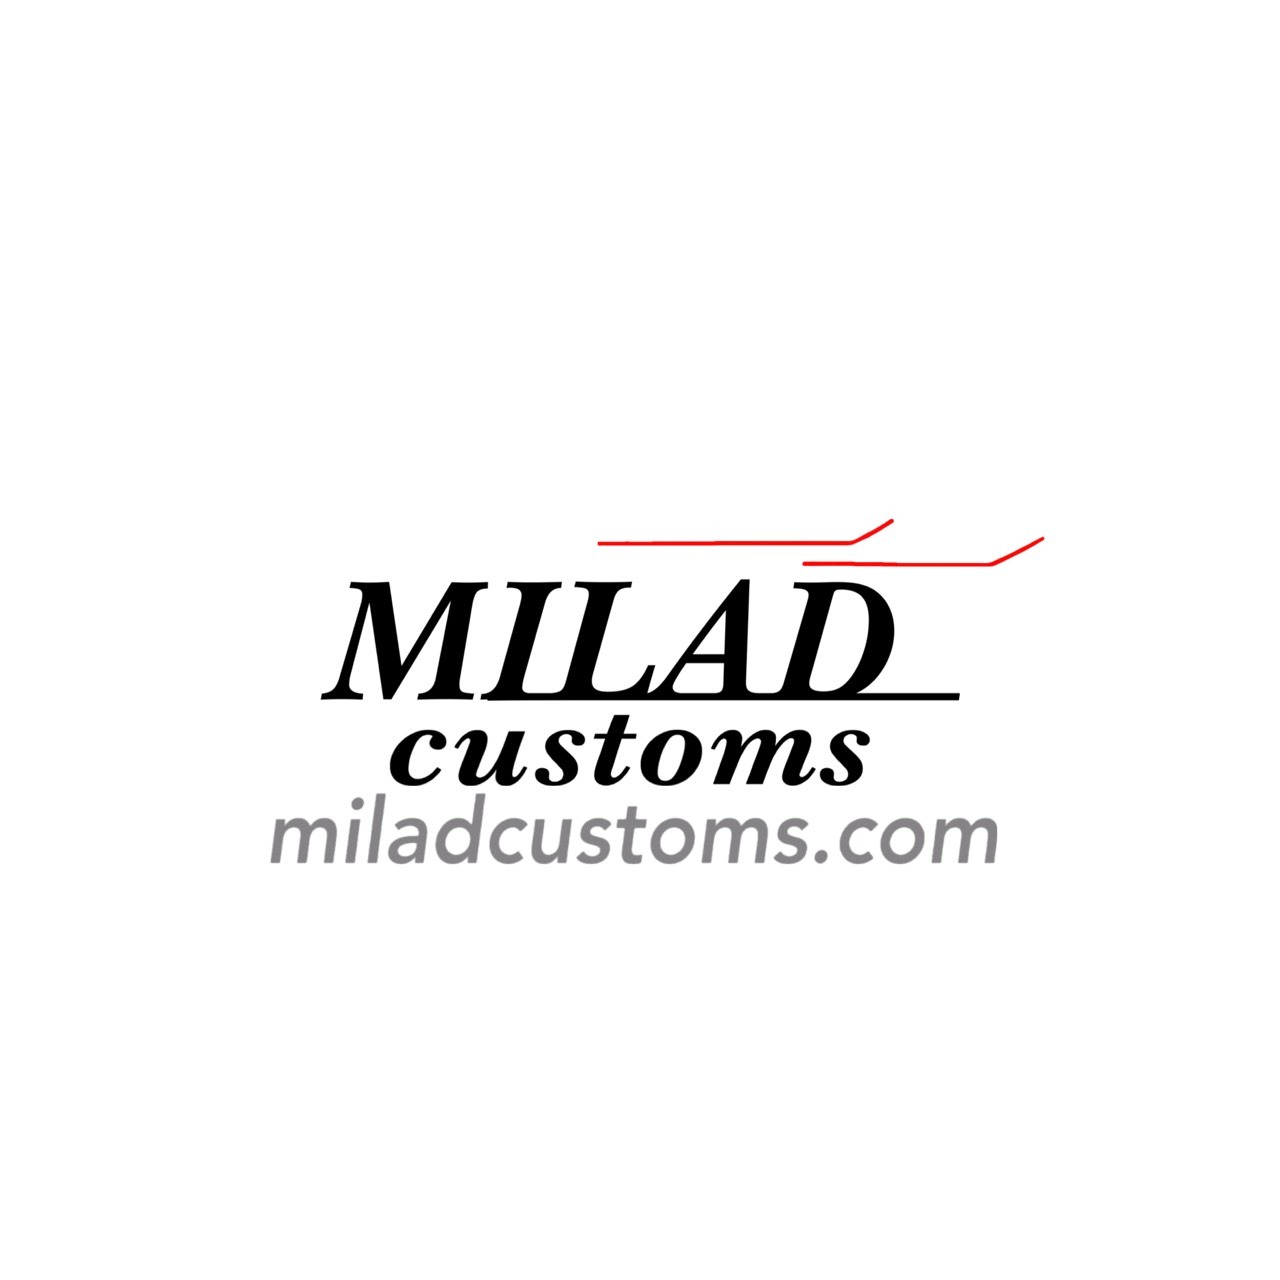 MILAD customs